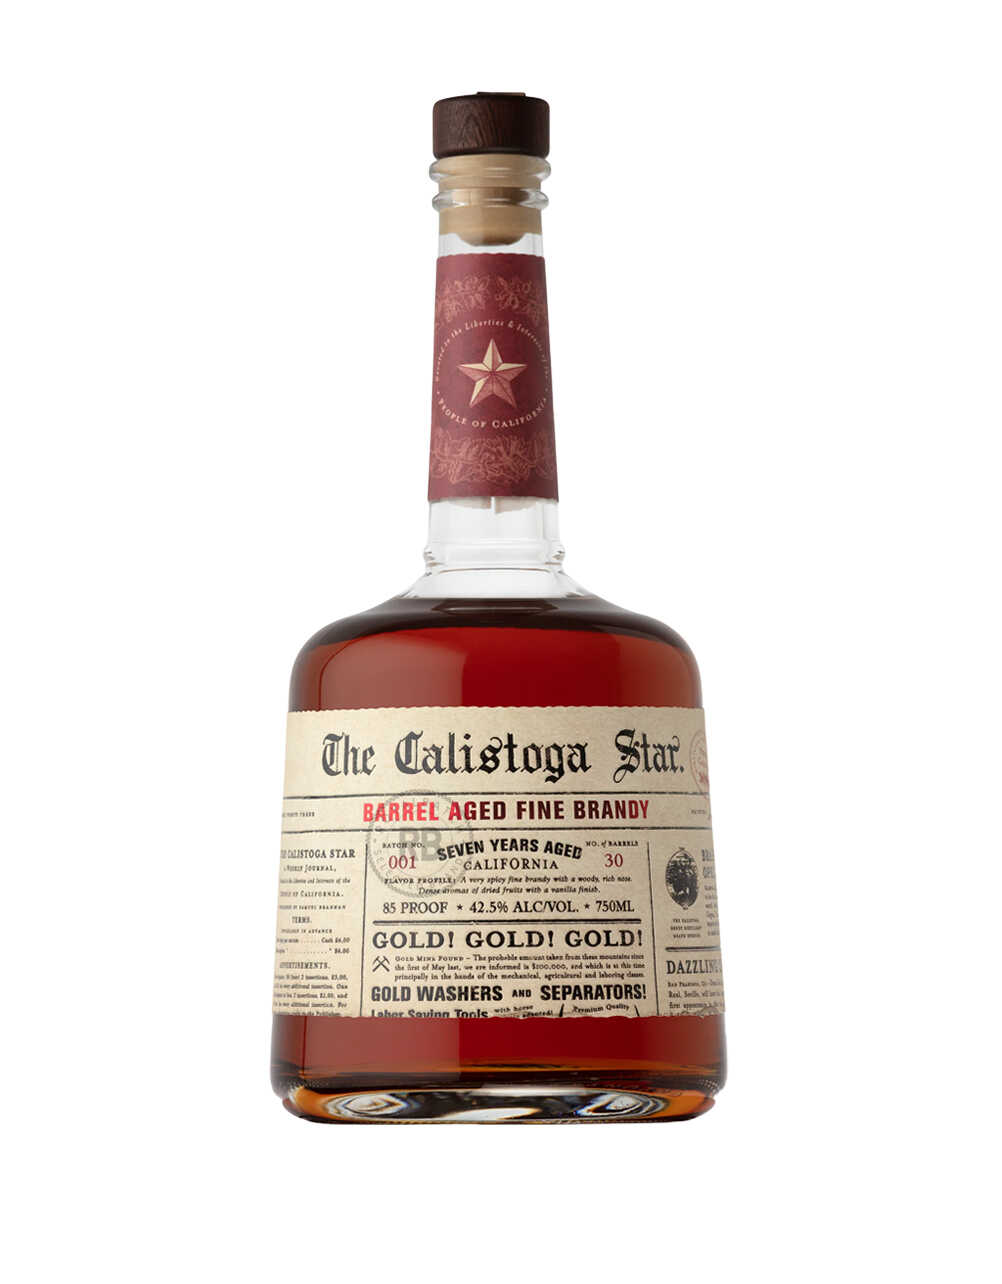 The Calistoga Star Barrel Aged Fine Brandy